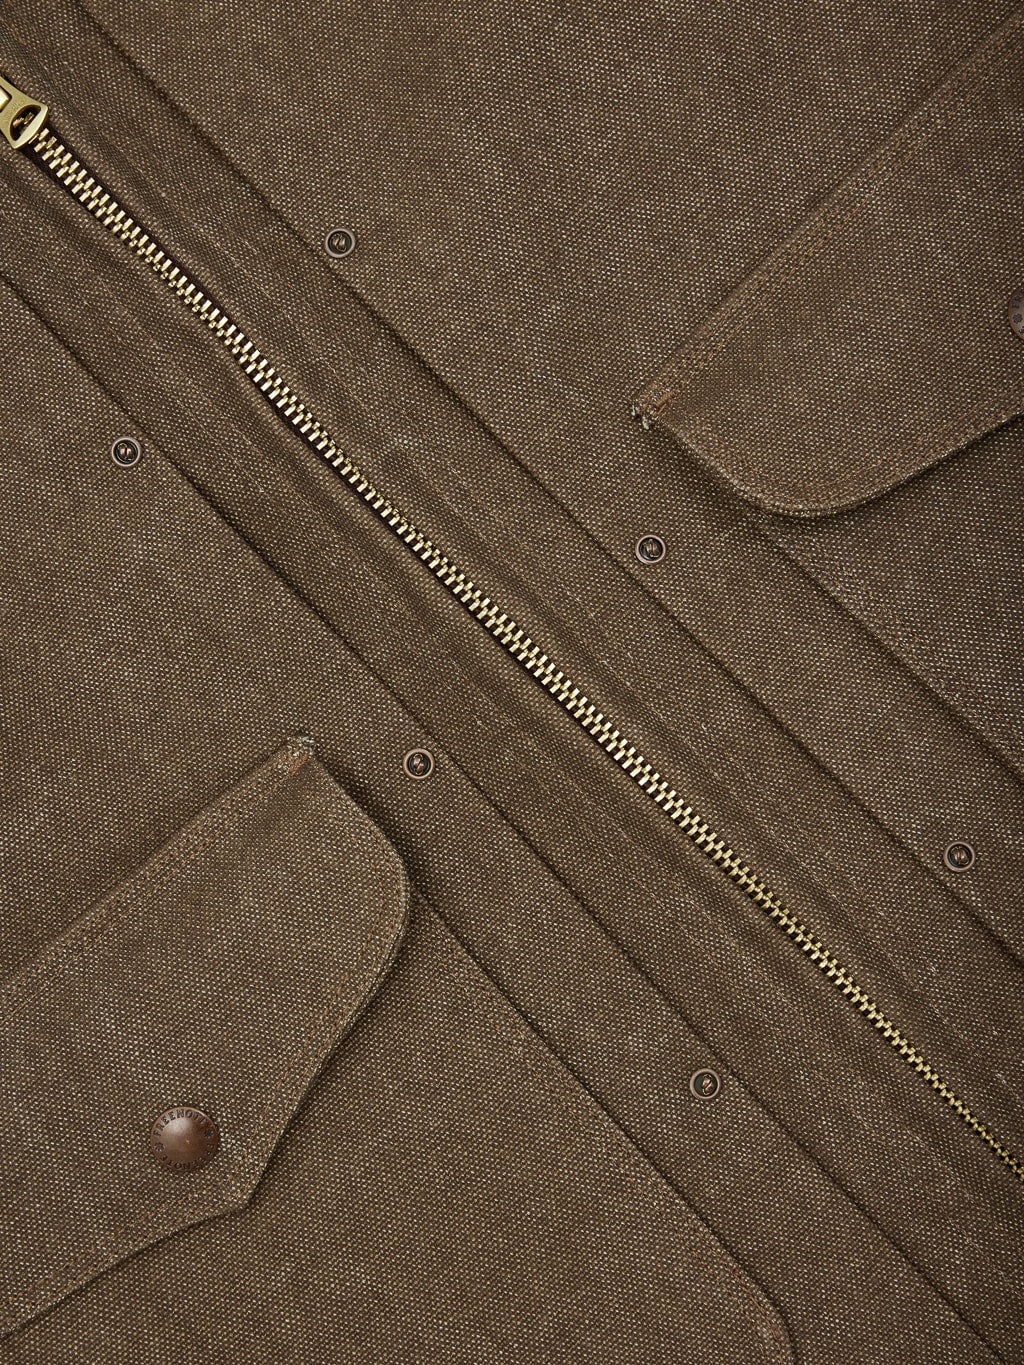 Freenote Cloth CD 4 Jacket Brown zipper